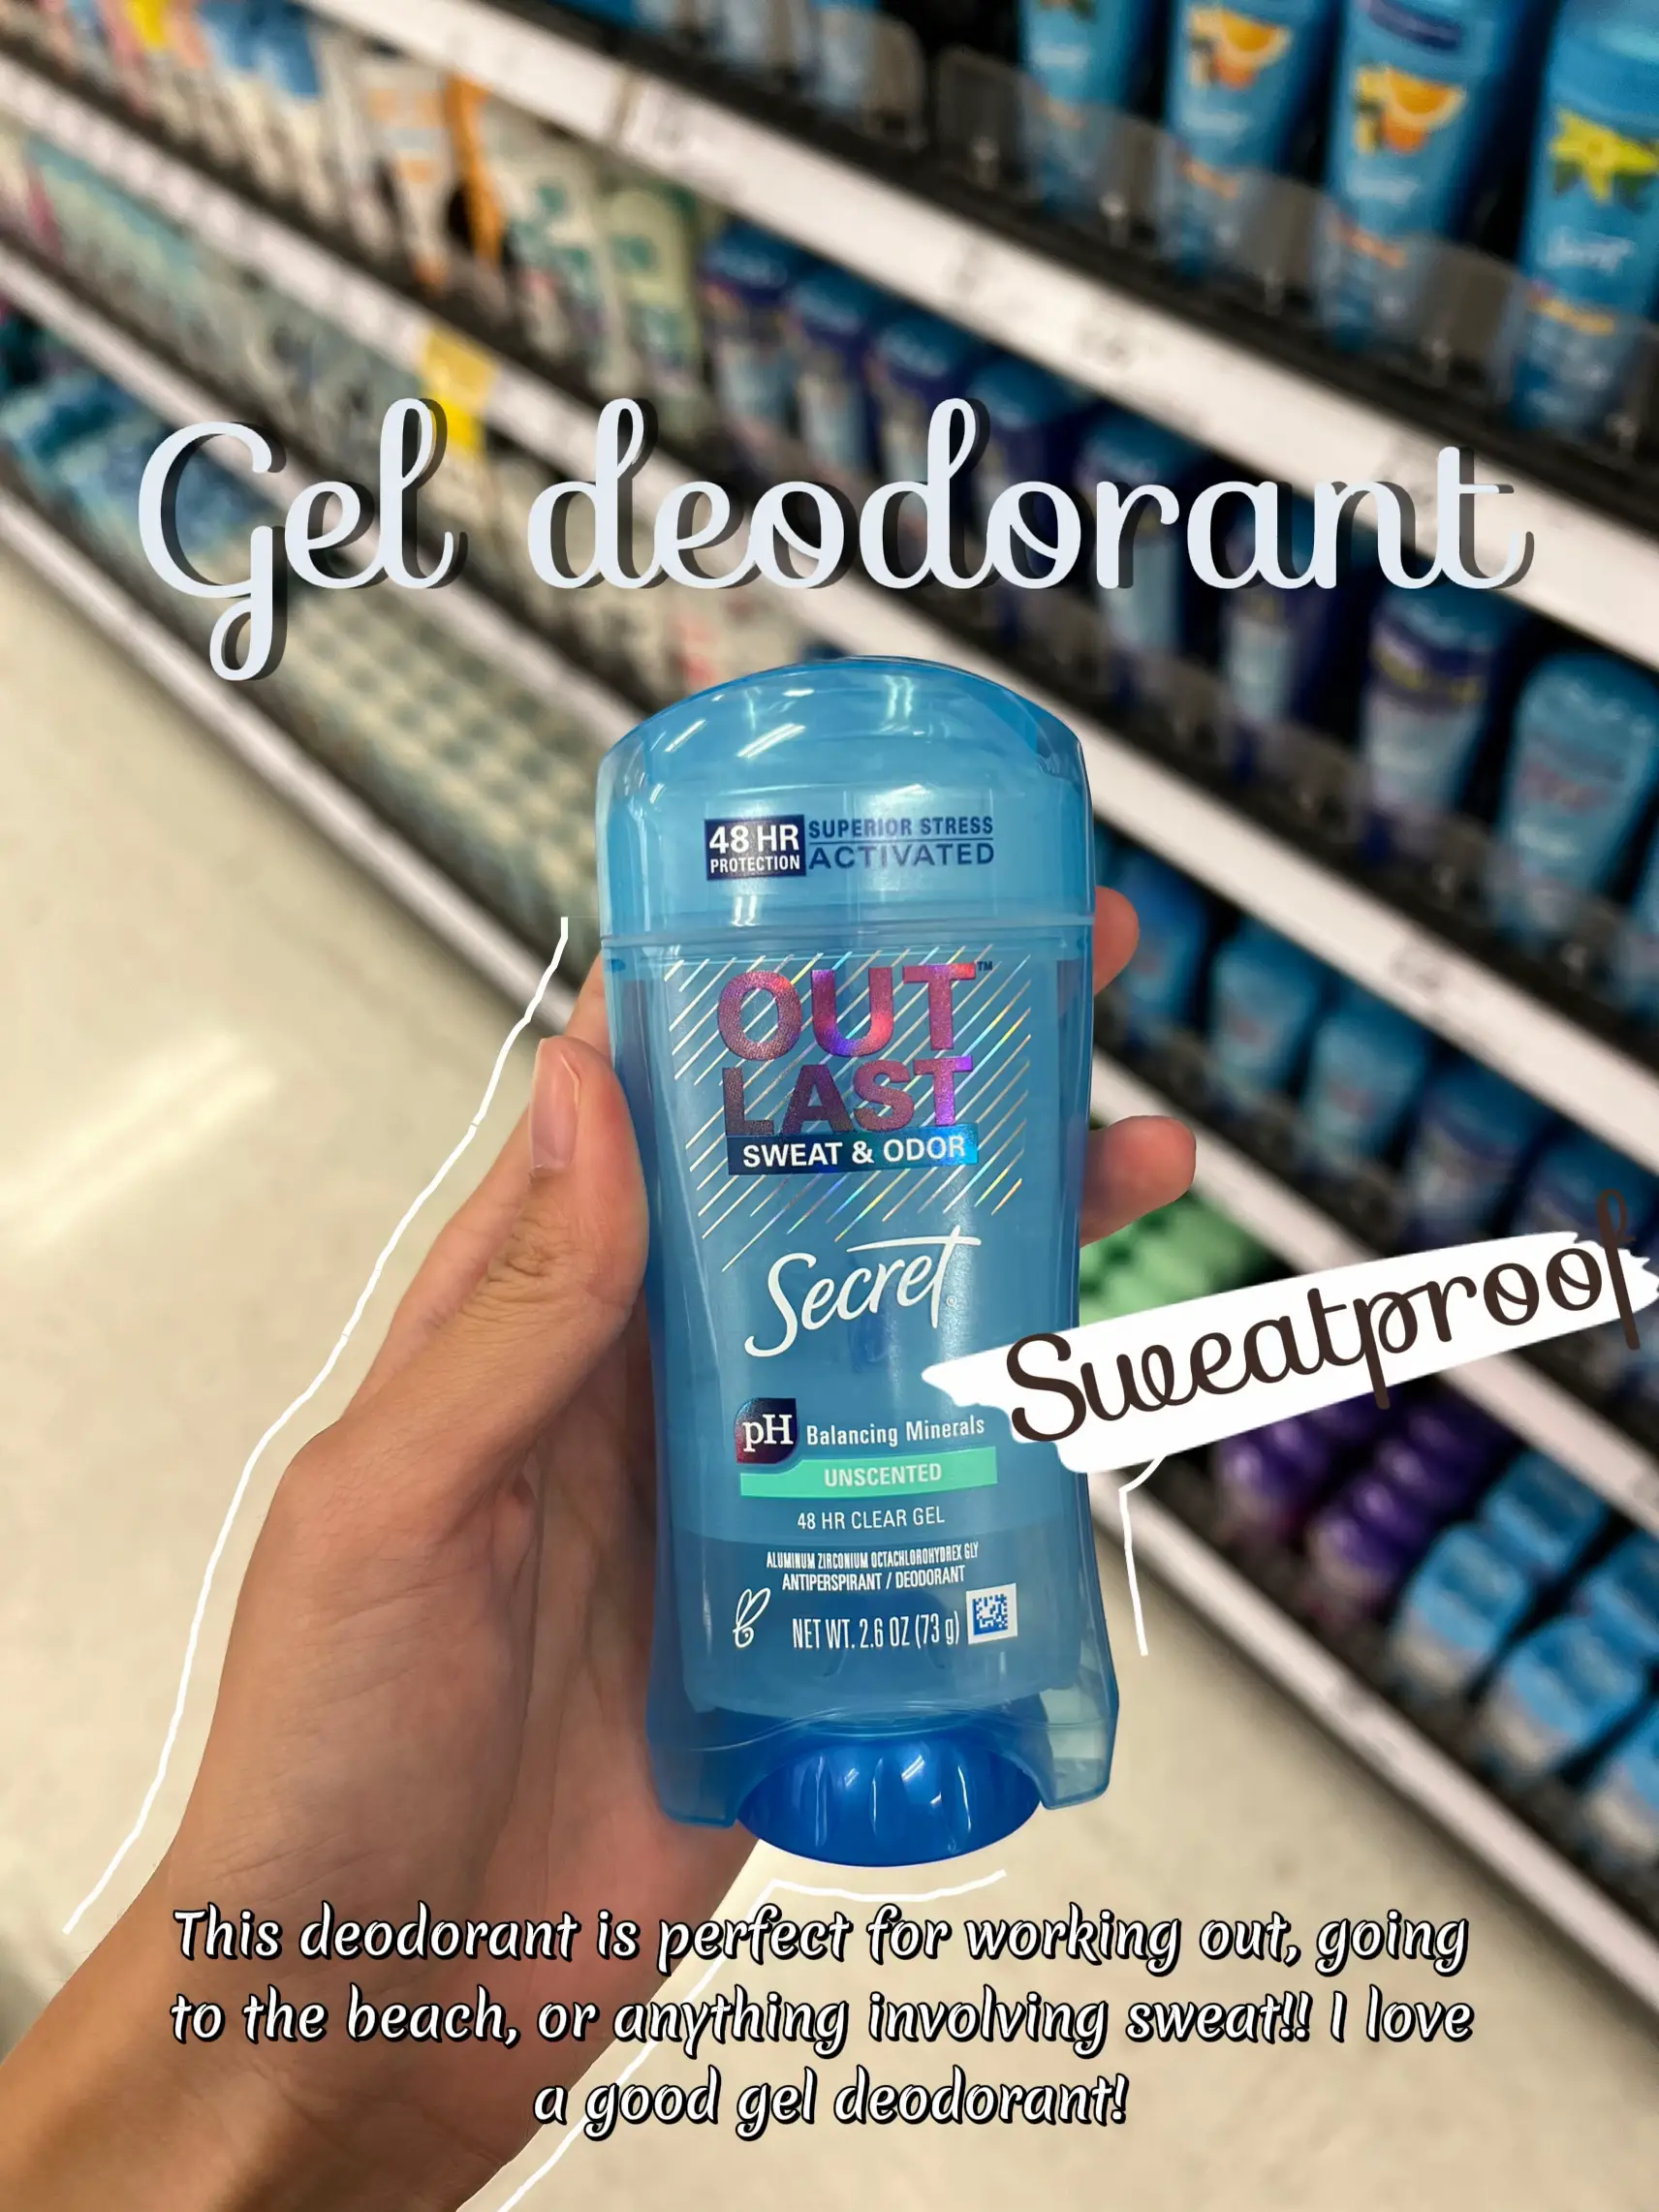  Secret Clinical Strength Sport Advanced Solid Antiperspirant &  Deodorant Marathon Fresh Scent 1.6 Oz (Pack of 2) : Beauty & Personal Care